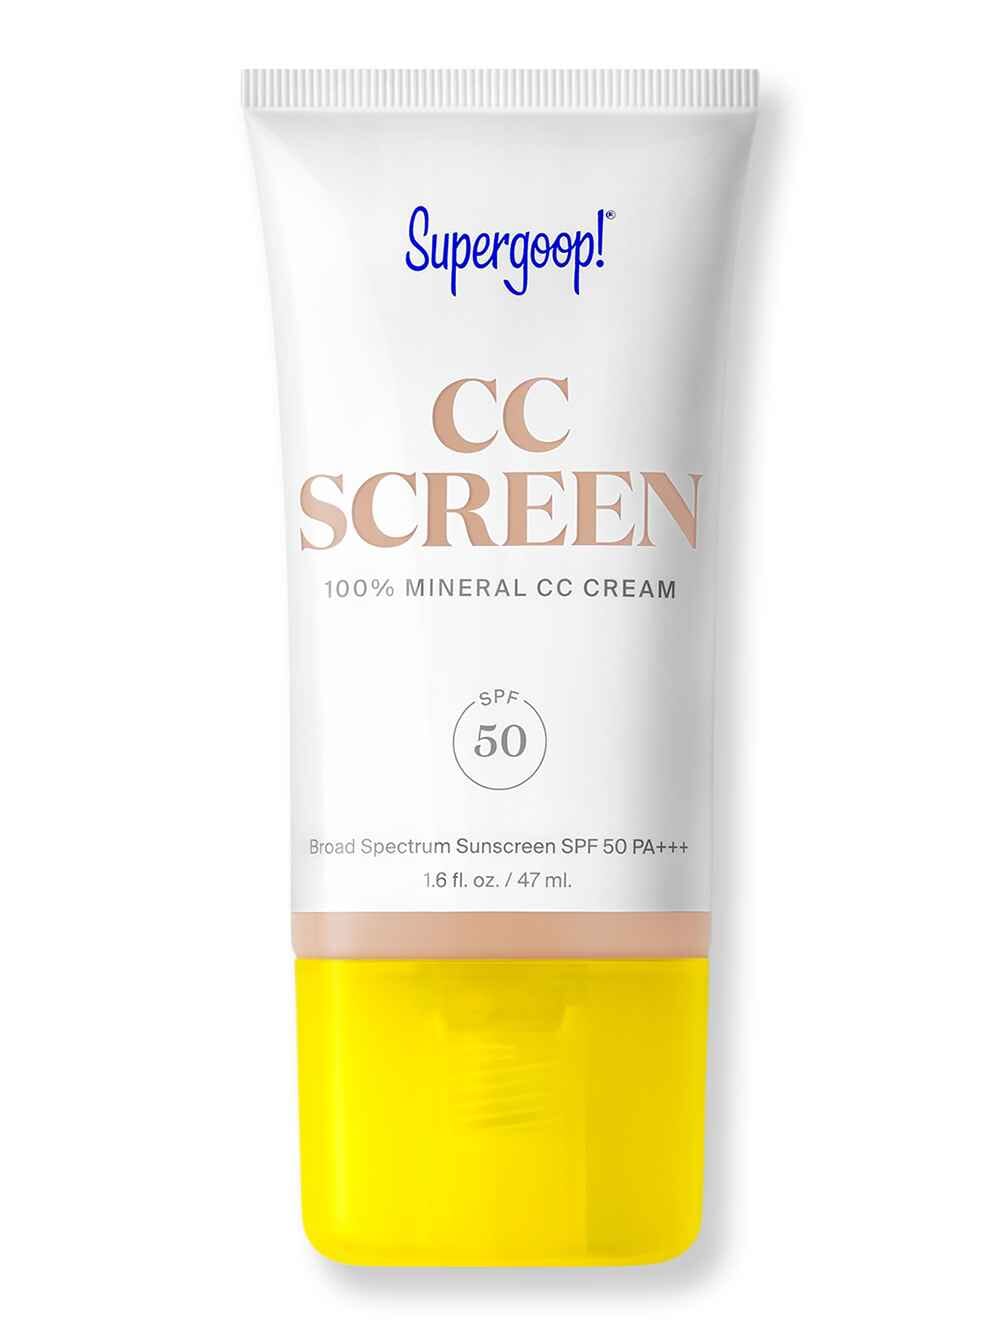 Supergoop Supergoop CC Screen 100% Mineral CC Cream SPF 50 1.6 fl oz47 ml100C Fair with Cool Undertones BB & CC Creams 